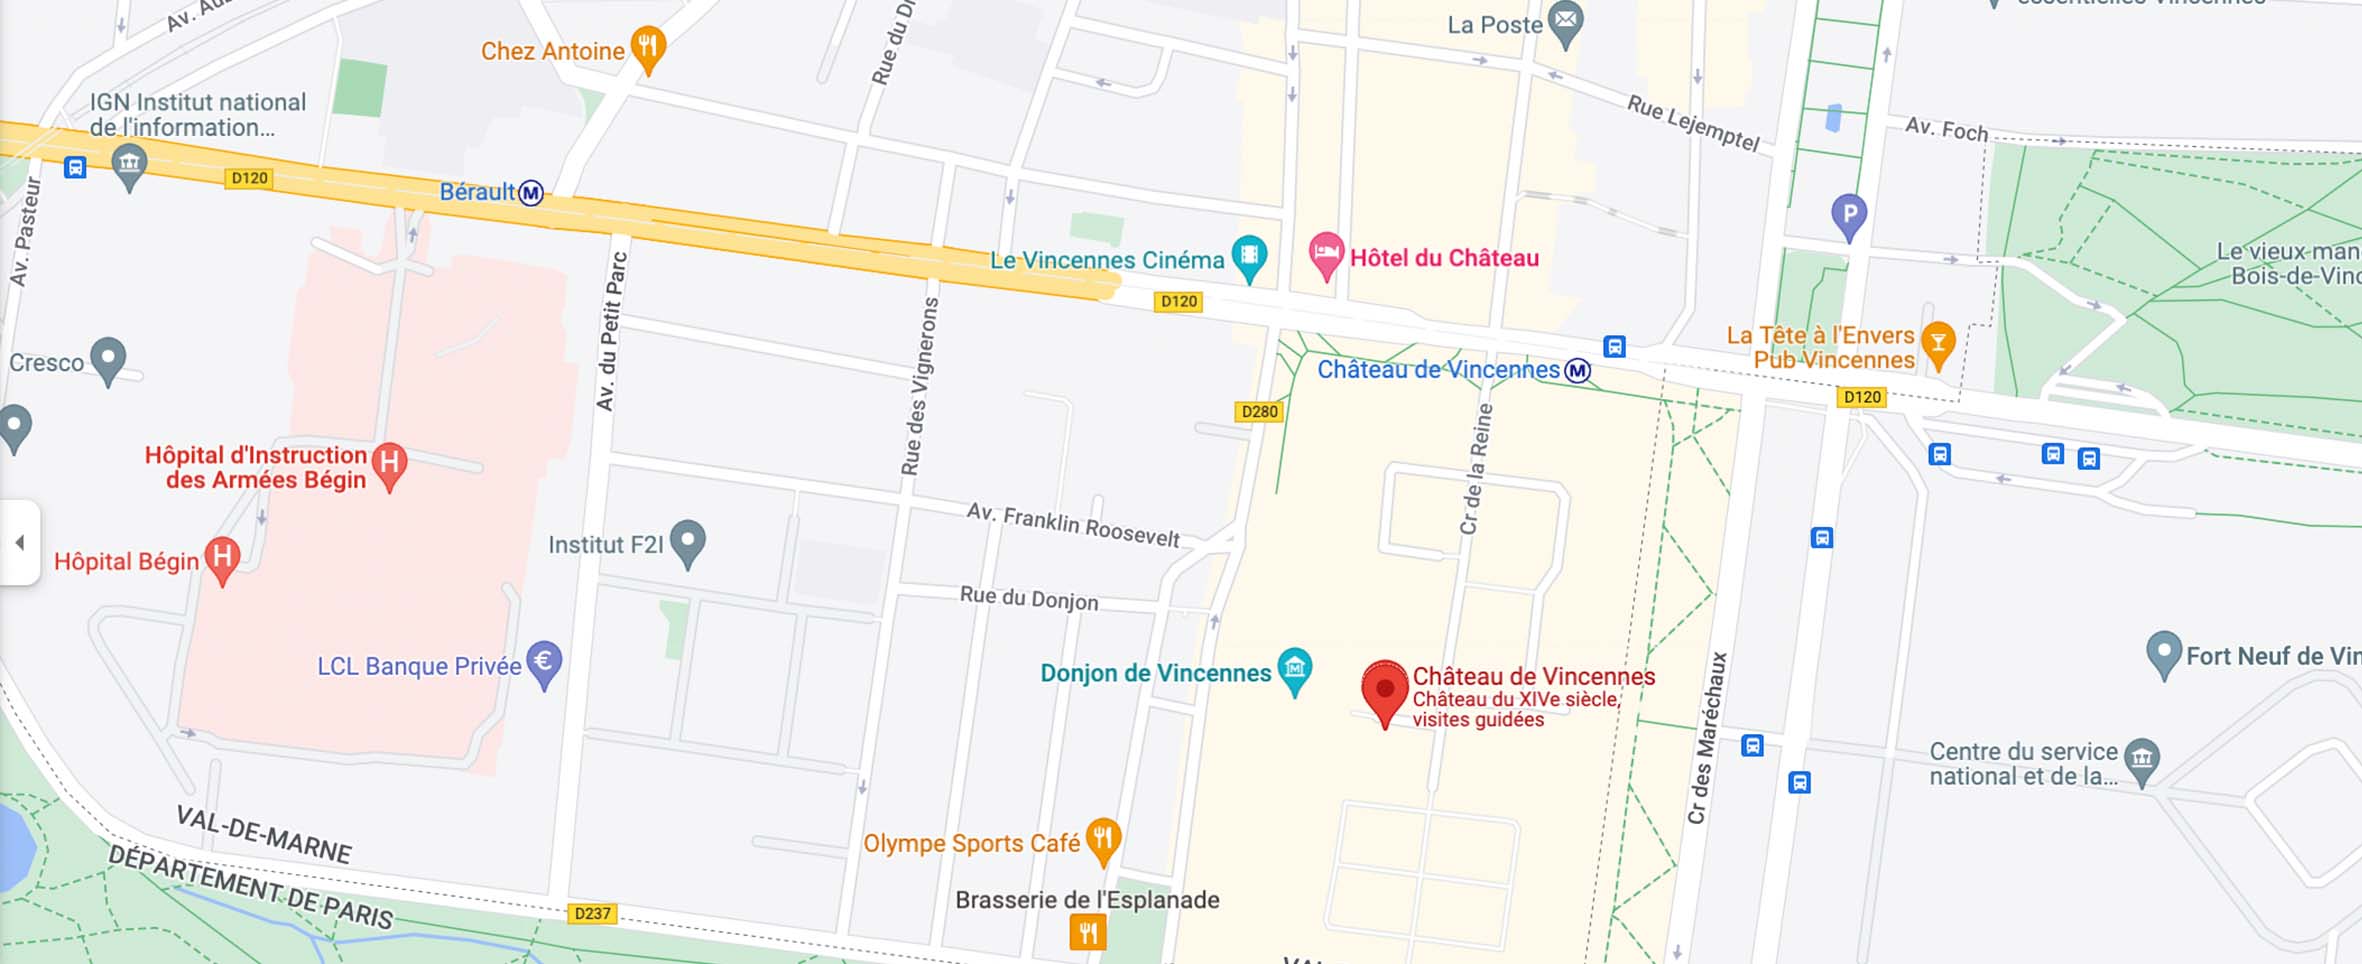 Mapa para llegar al castillo de Vincennes